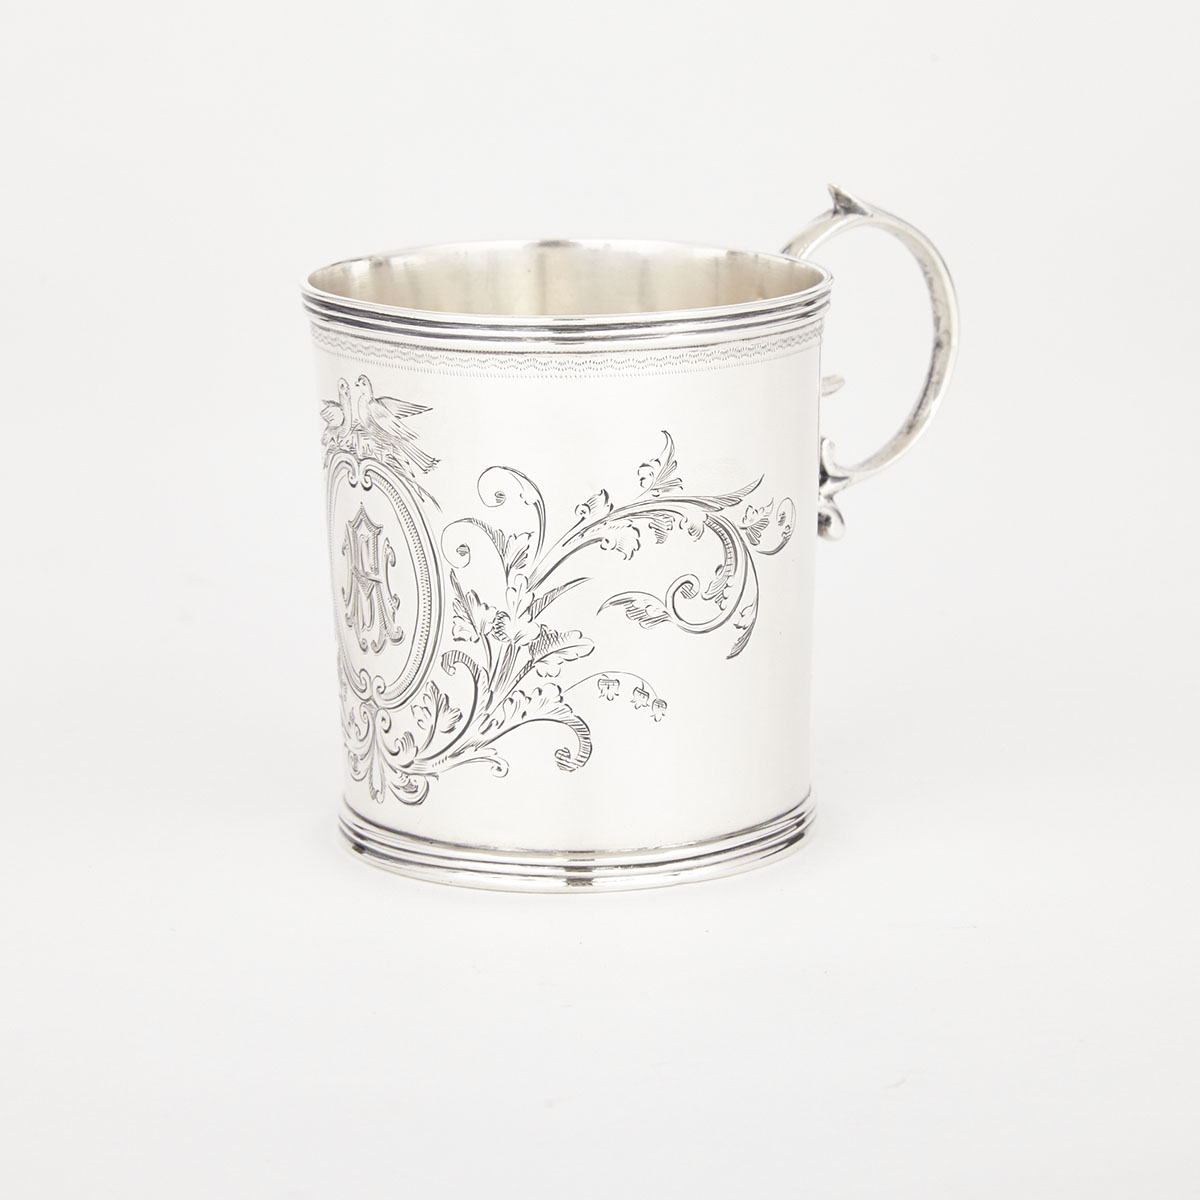 Canadian Silver Child’s Mug, Lash & Co., Toronto, Ont., c.1865